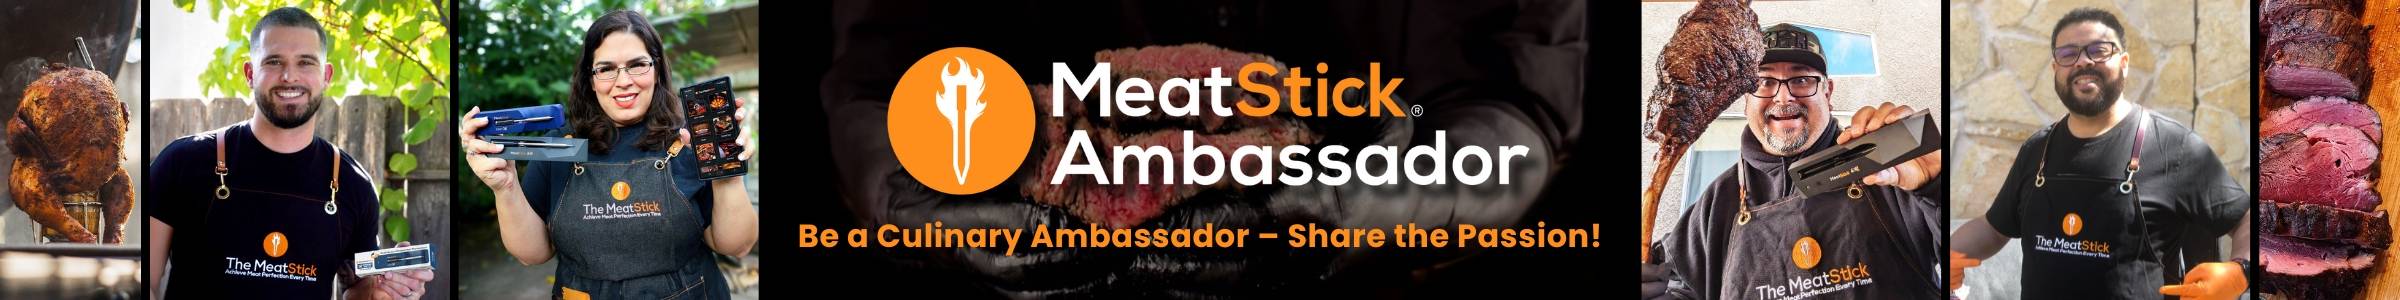 The MeatStick Brand Ambassador Program: Be a Culinary Ambassador, Share the Passion!